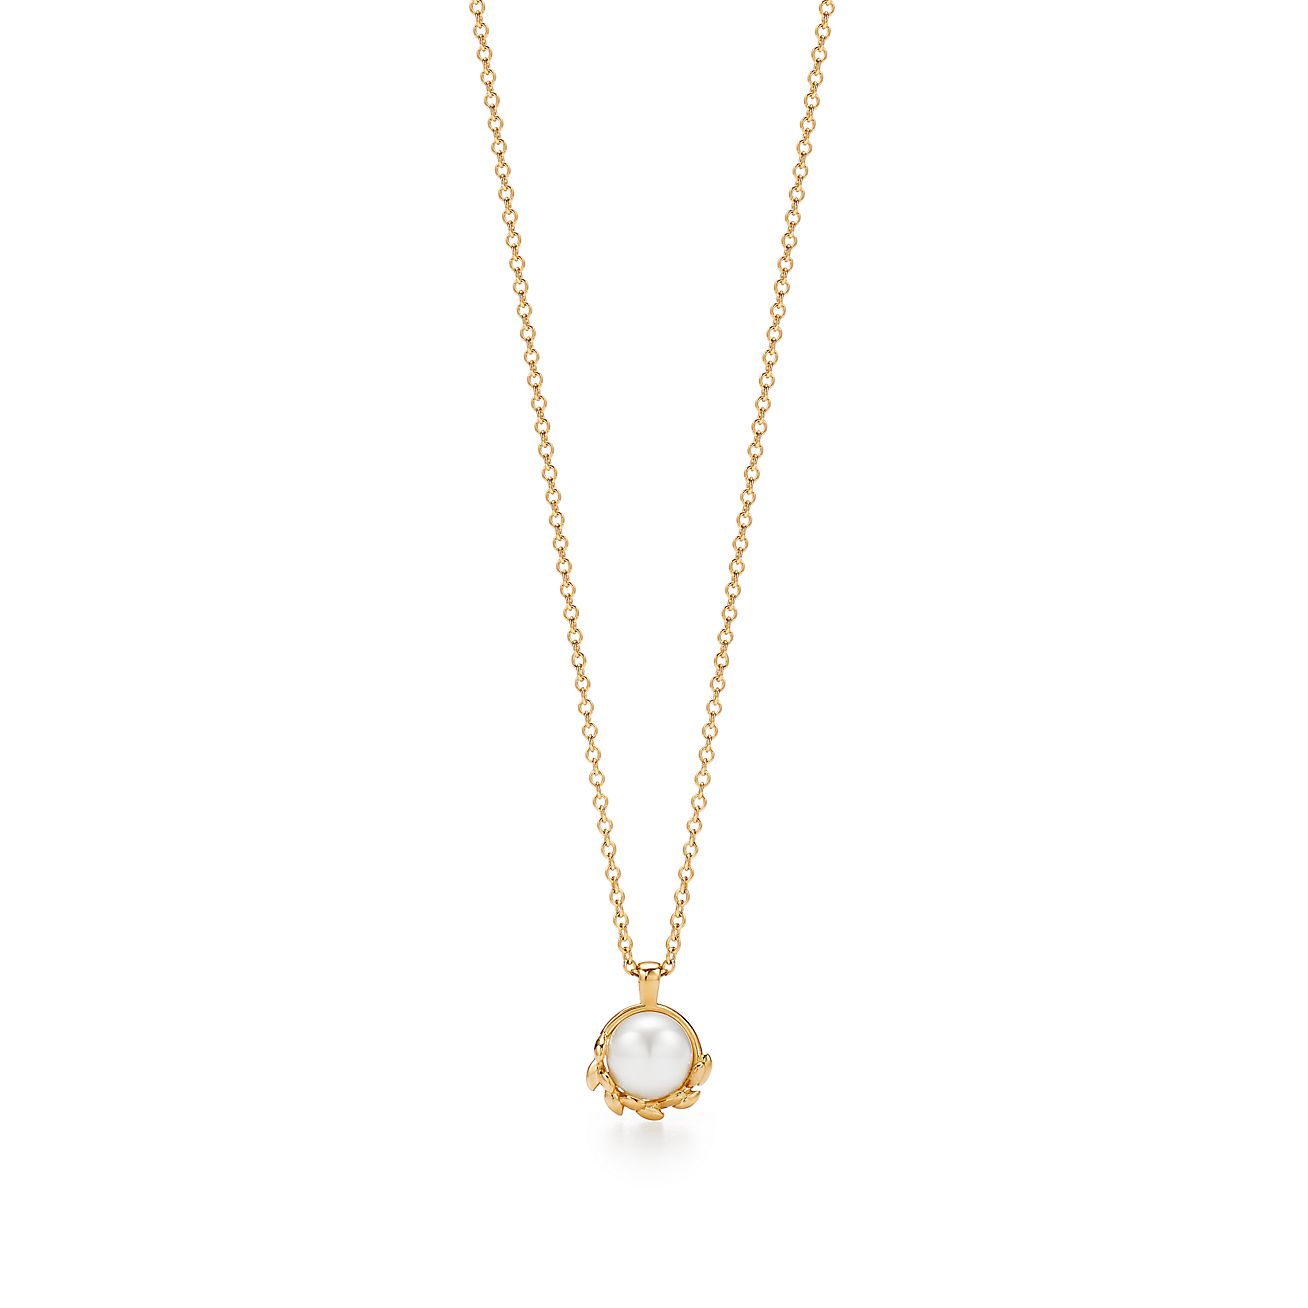 tiffany olive leaf necklace gold